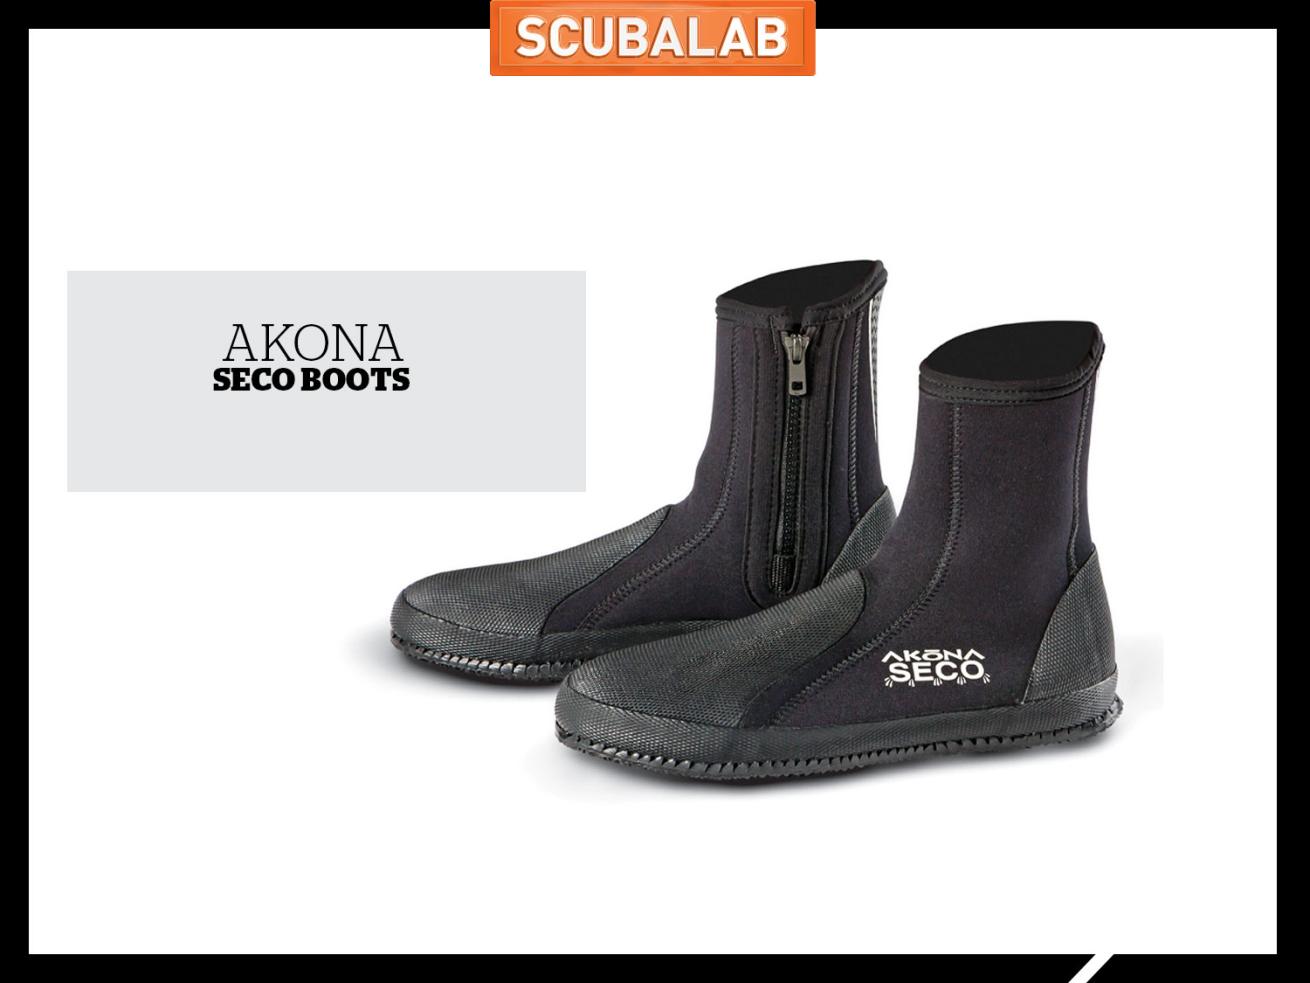 Akona Seco scuba diving boots